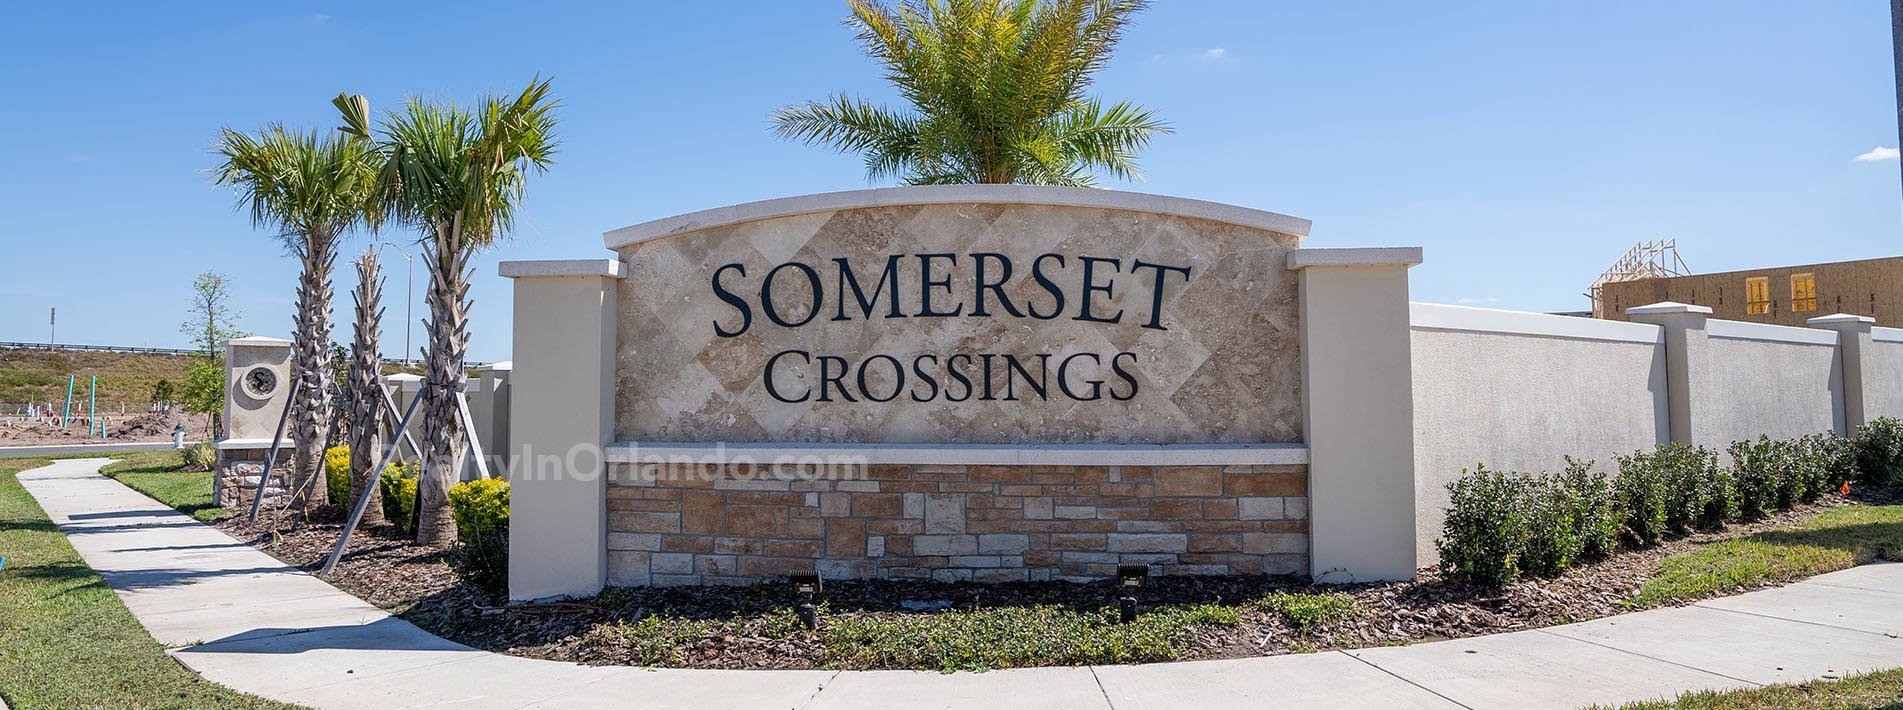 Somerset Crossings Lake Nona Real Estate